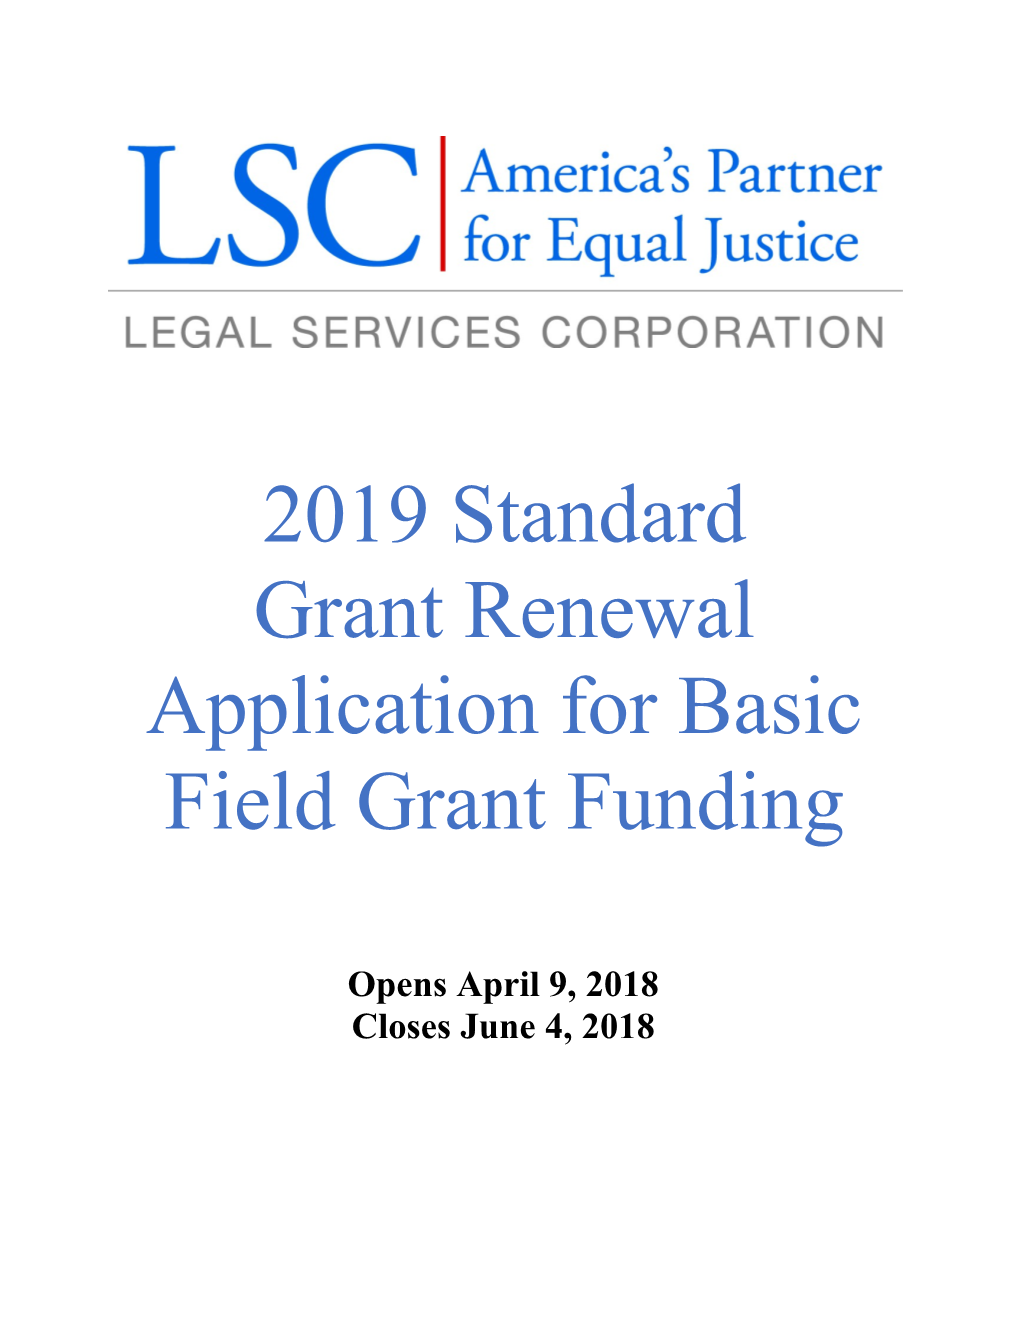 Grant Renewal Application for Basic Field Grant Funding